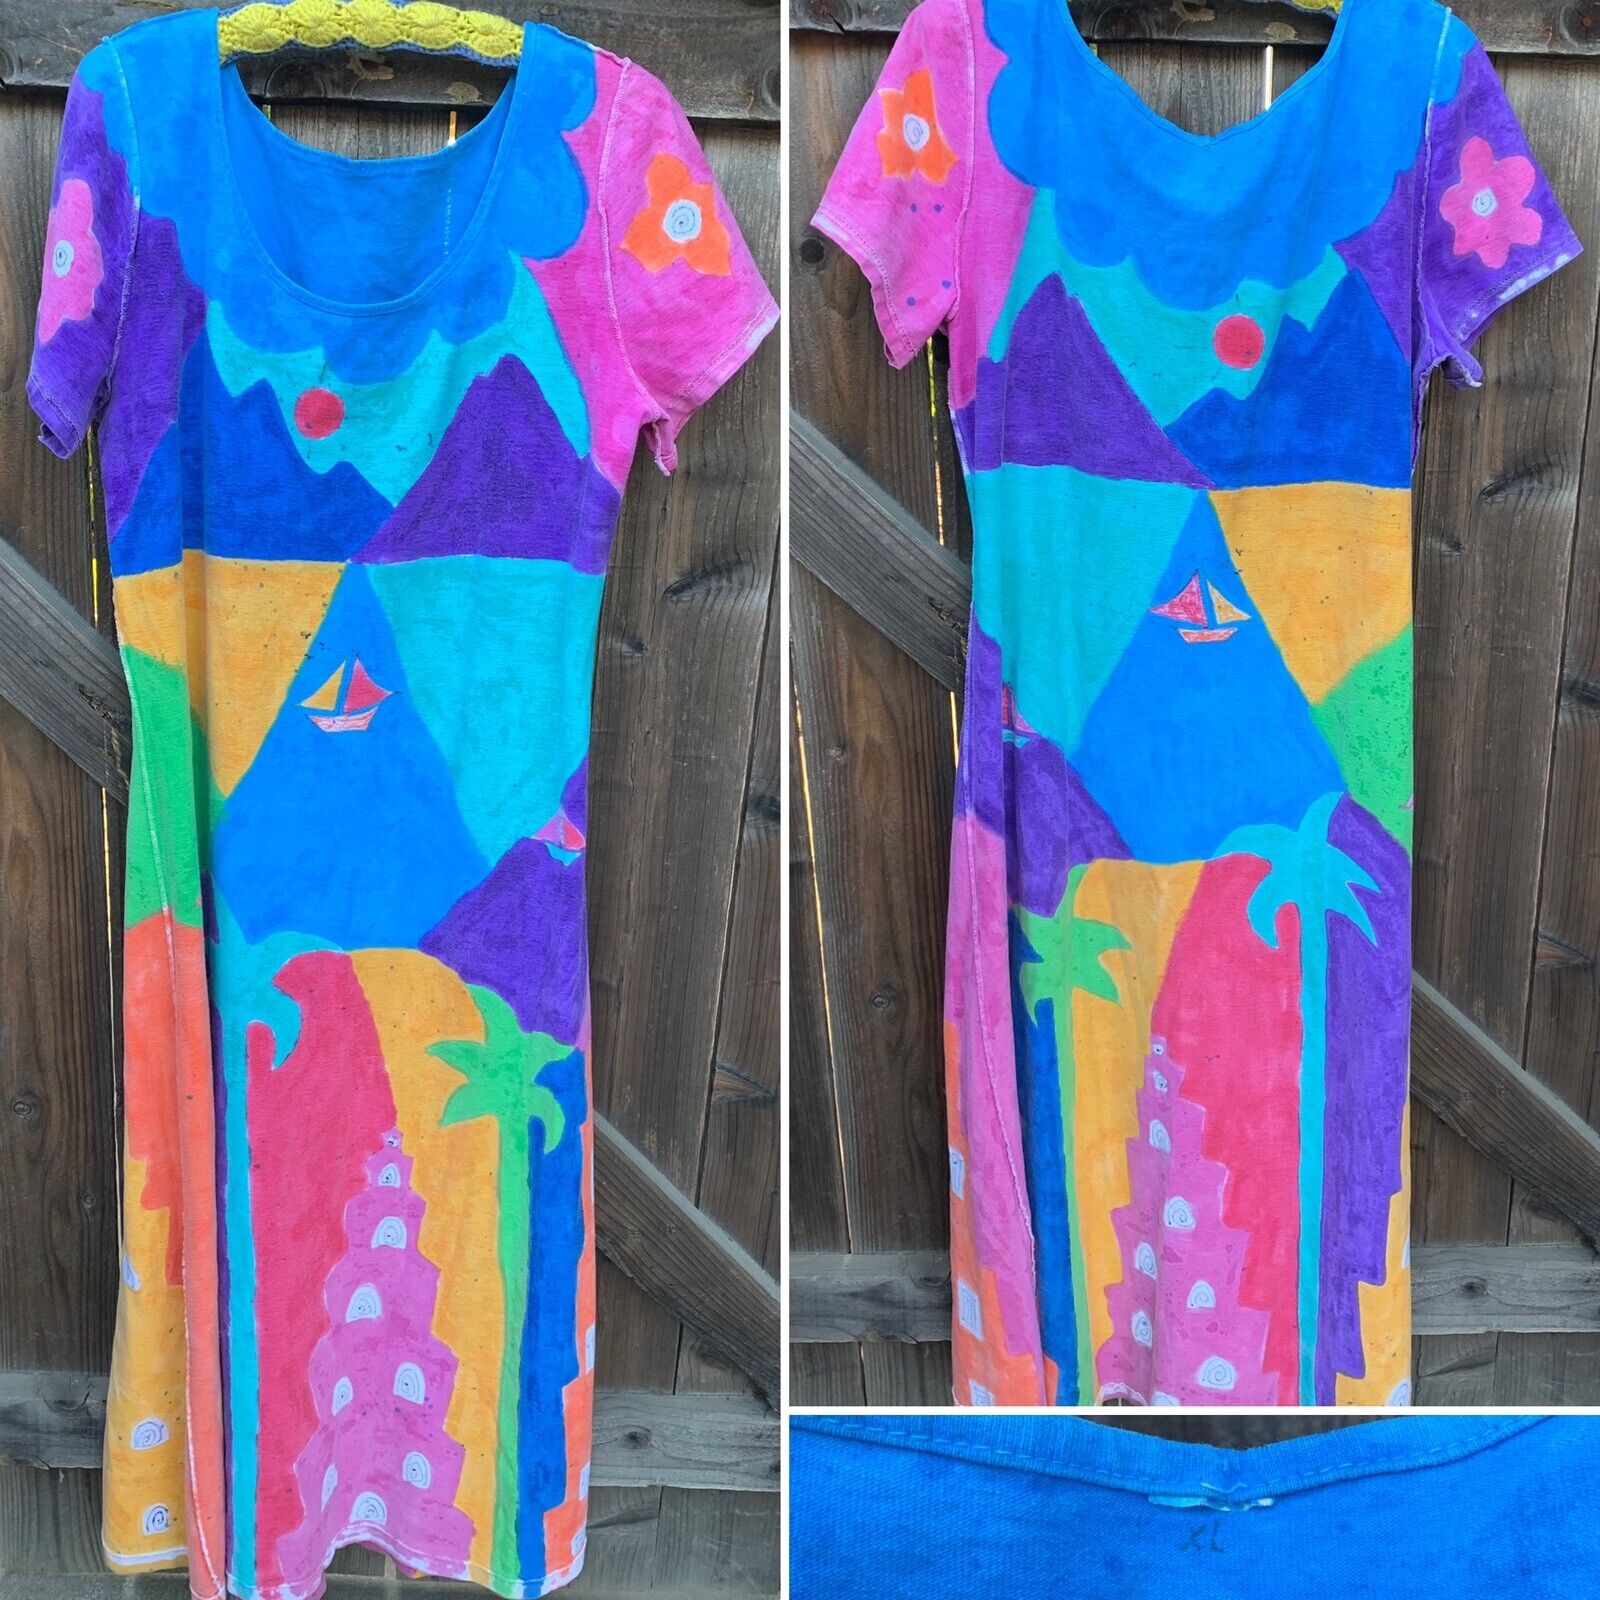 Vintage colorful geometric ocean sailboat palm tree maxi dress 80s 90s style XL Standardowa dostawa natychmiastowa